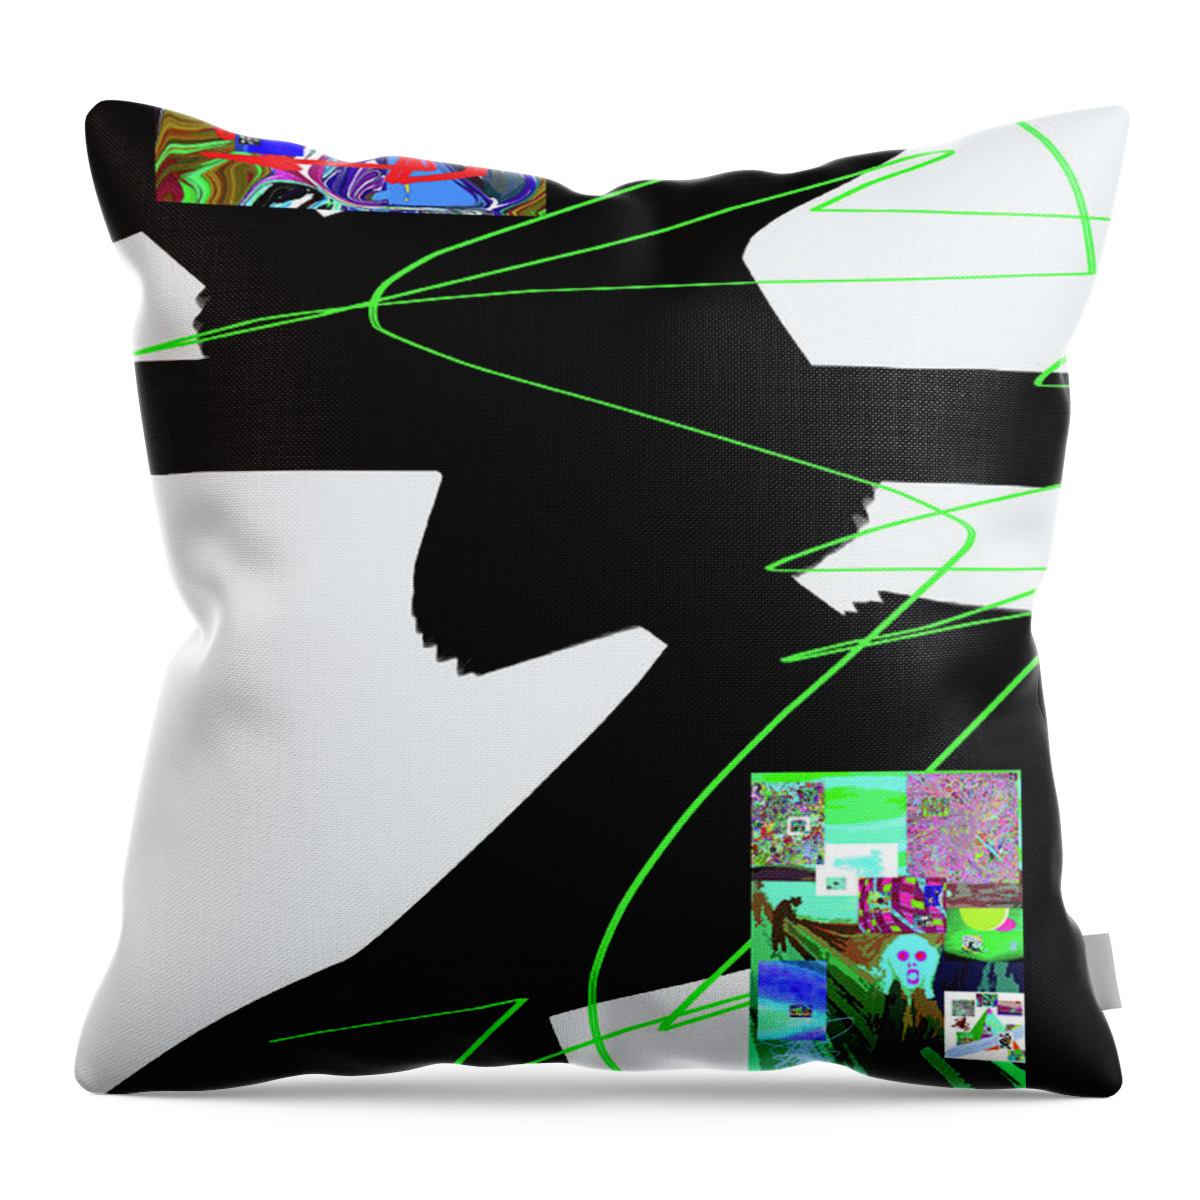 Walter Paul Bebirian Throw Pillow featuring the digital art 6-22-2015dabcdefghijklm by Walter Paul Bebirian